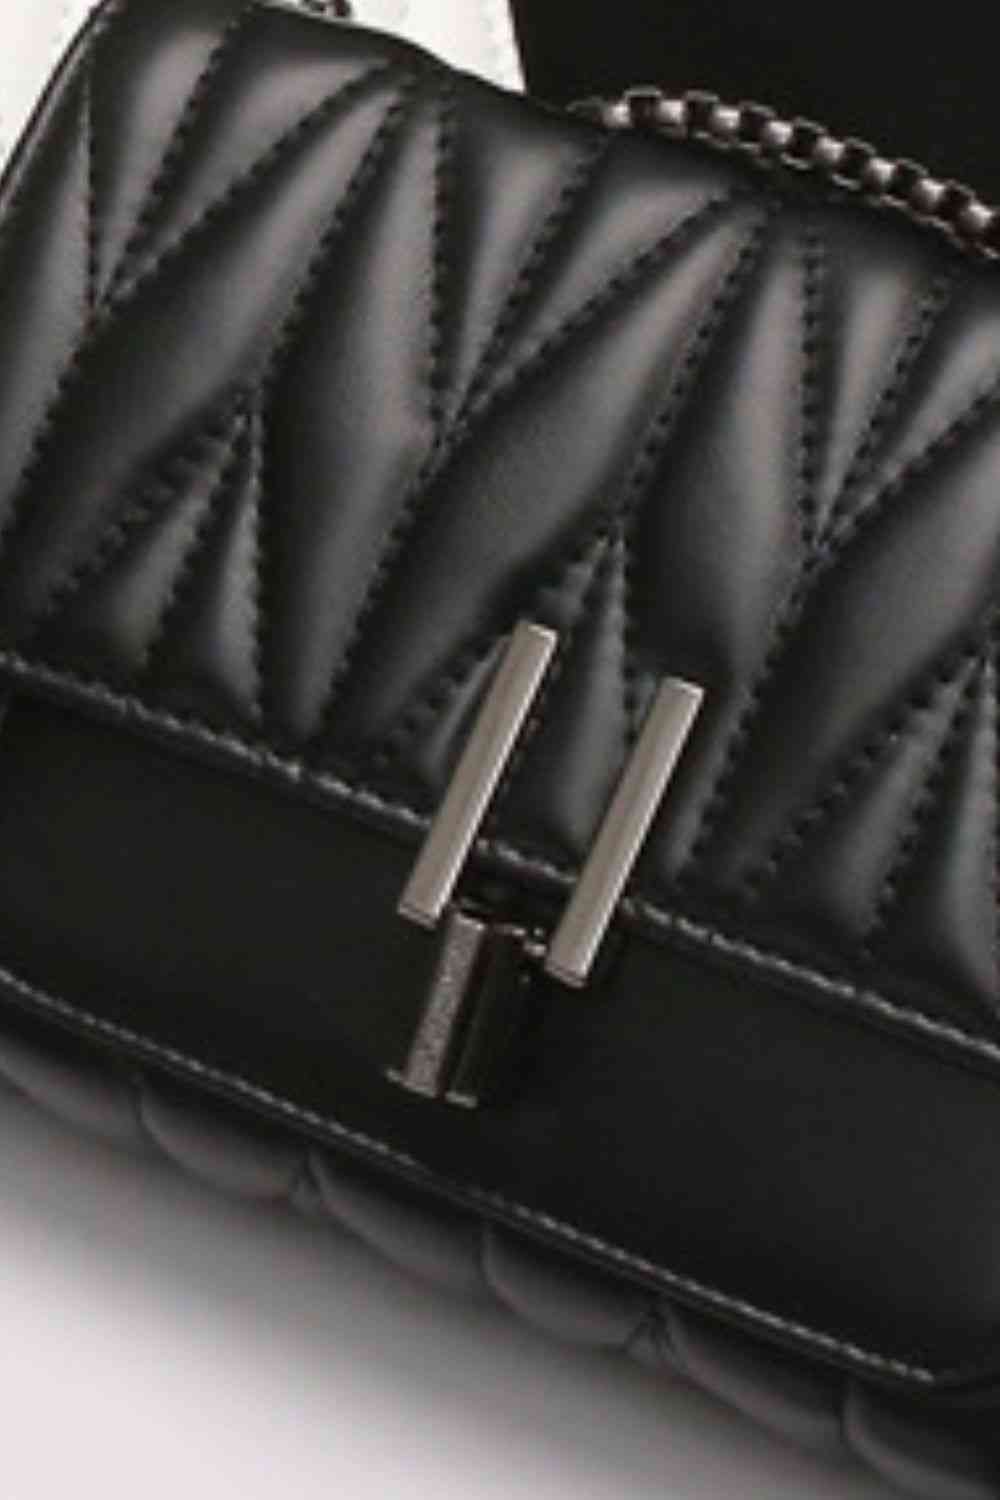 Adored PU Leather Crossbody Bag Trendsi